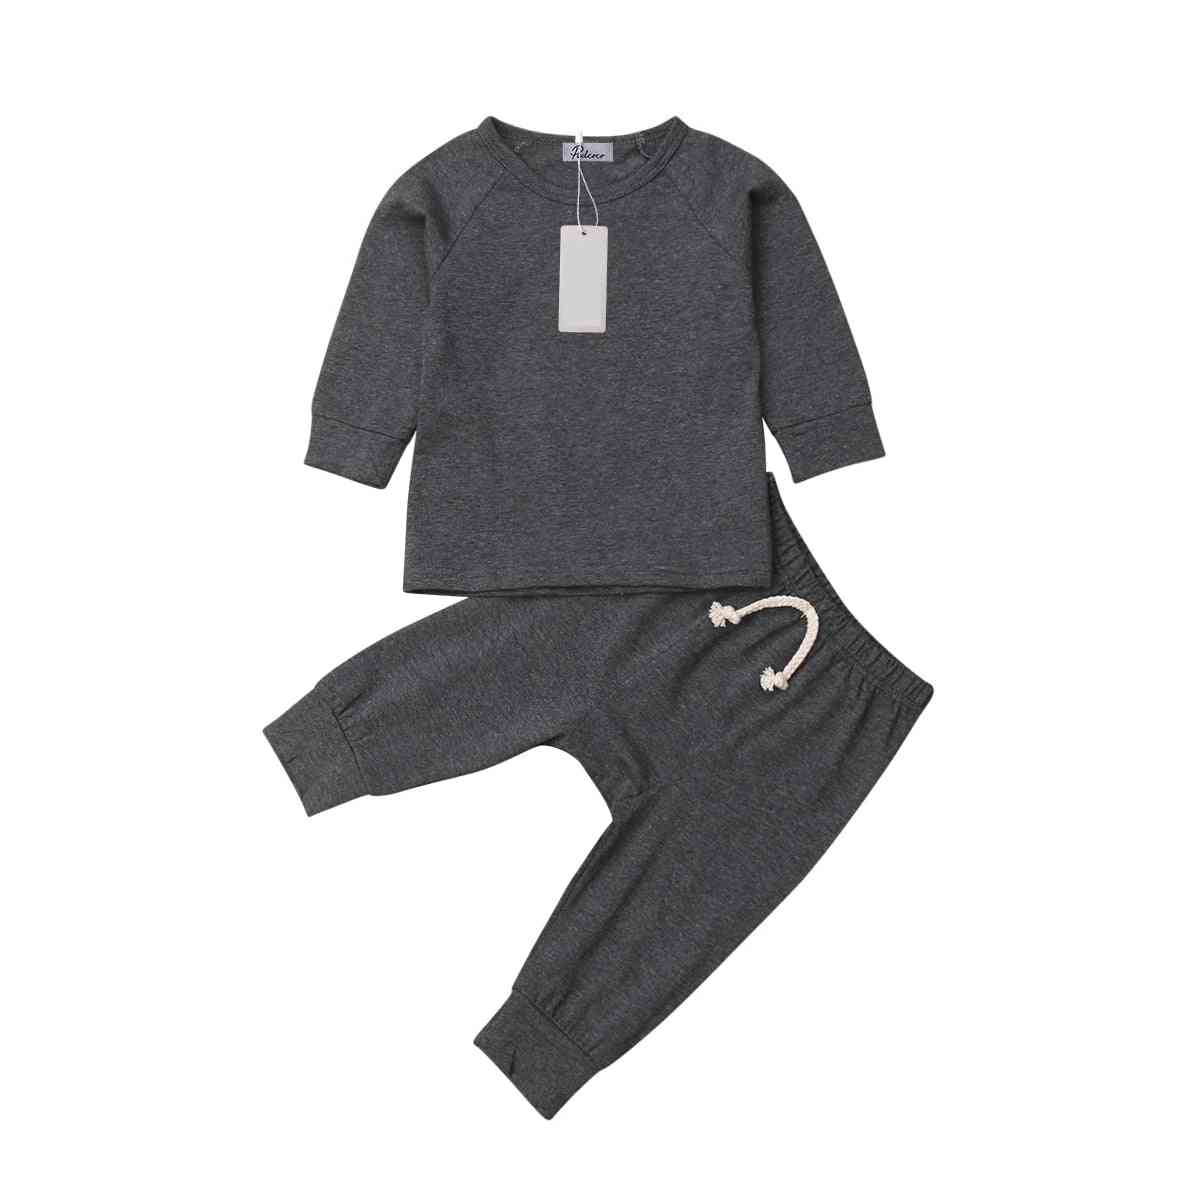 Baby Boy Girl Soft Cotton Pajamas Clothes Set Sleepwear Nightwear Outfit Newborn Infant